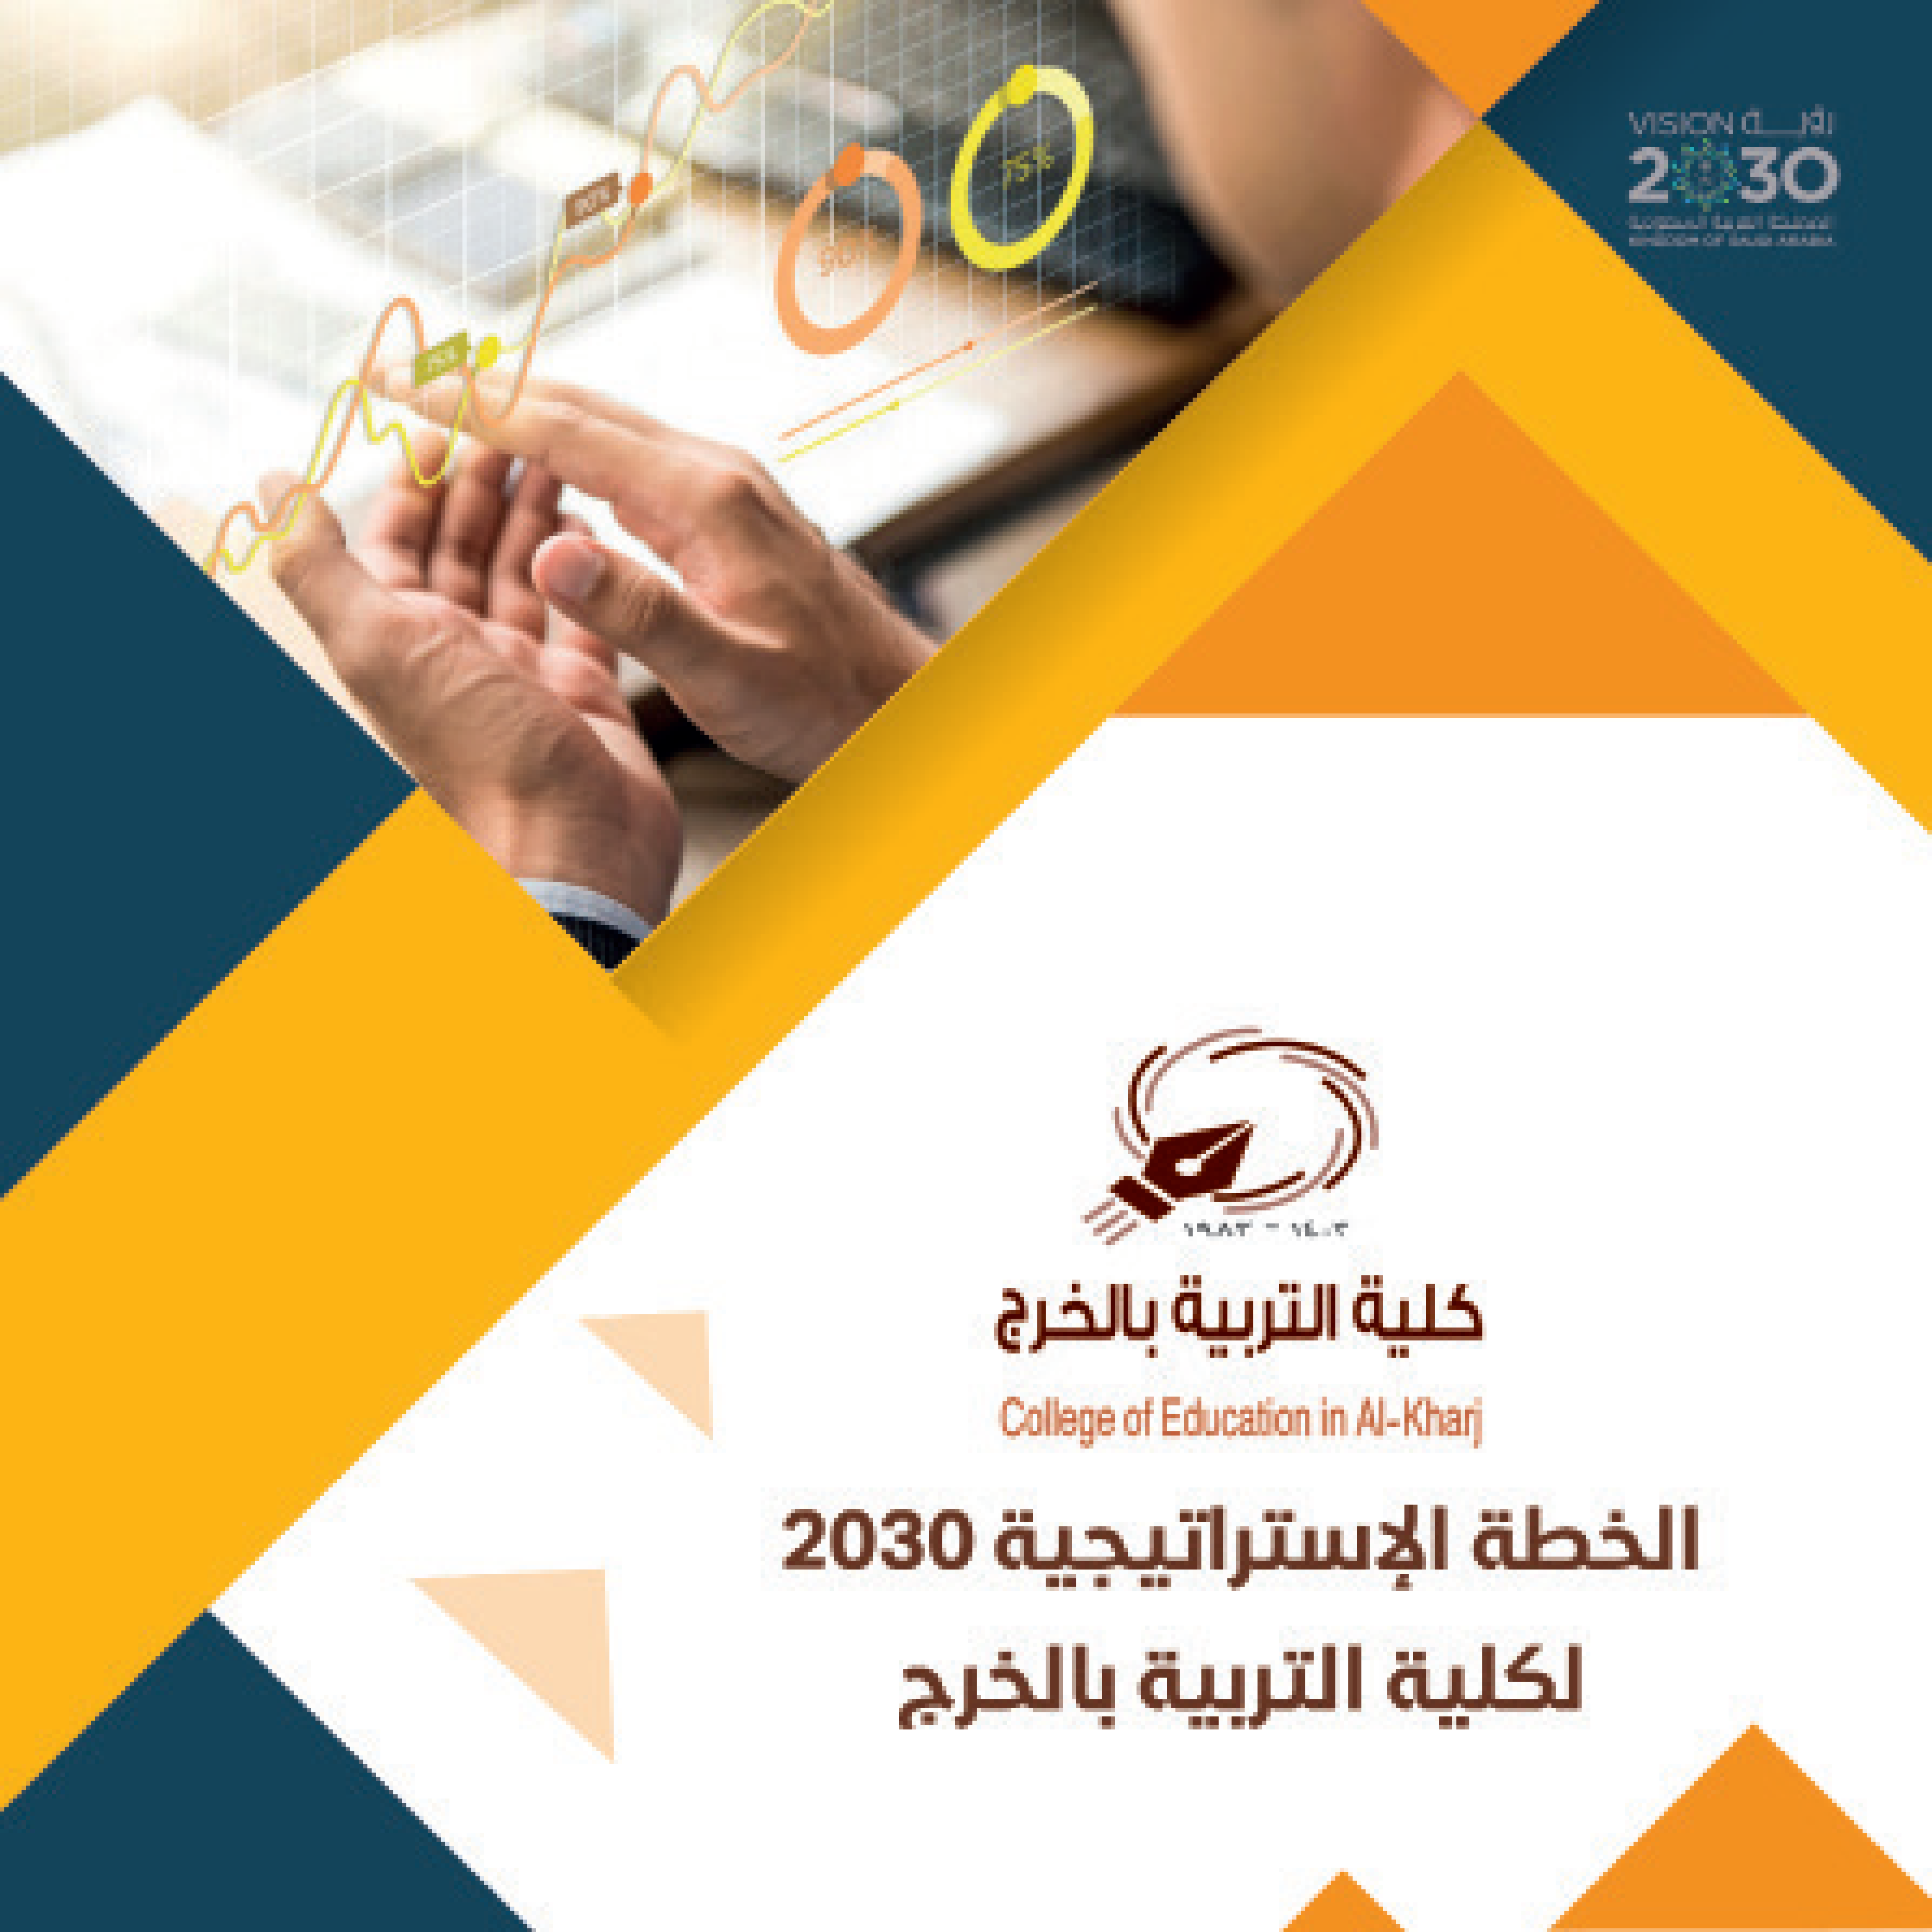 Strategic plan for the College of Education in Al-Kharj 2030